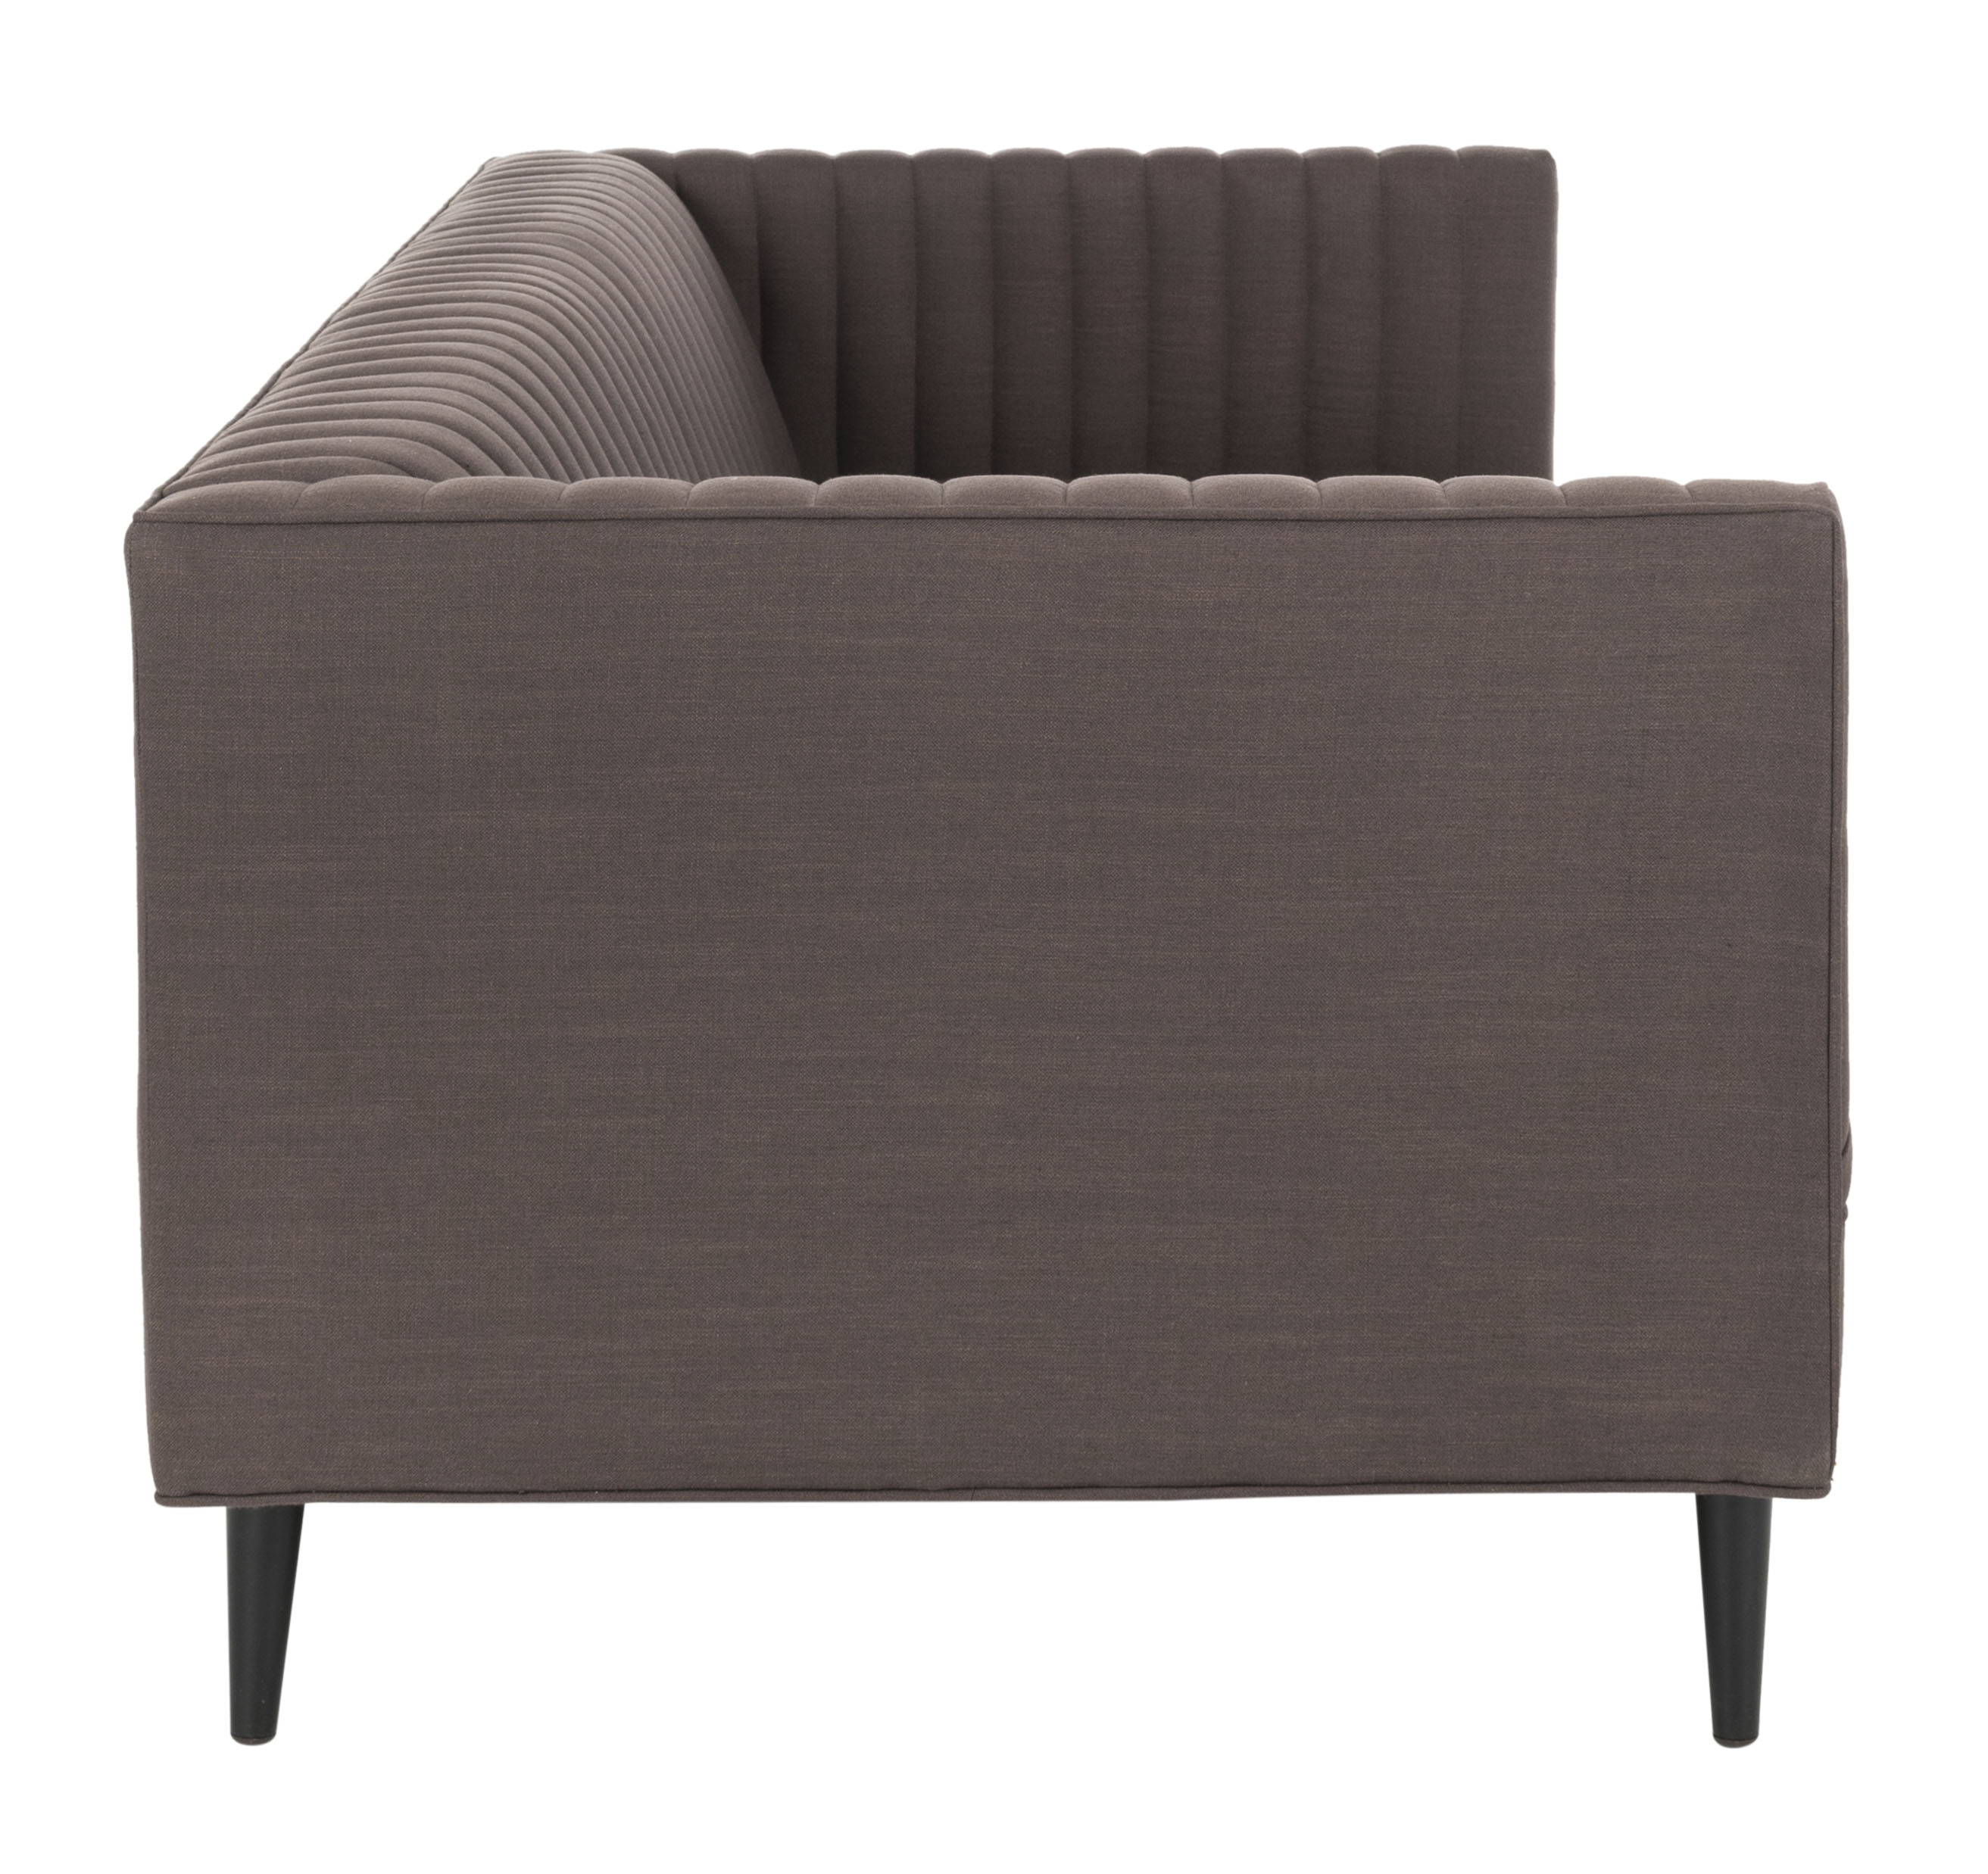 Carmina Channeled Linen Sofa - Brown - Arlo Home - Image 3